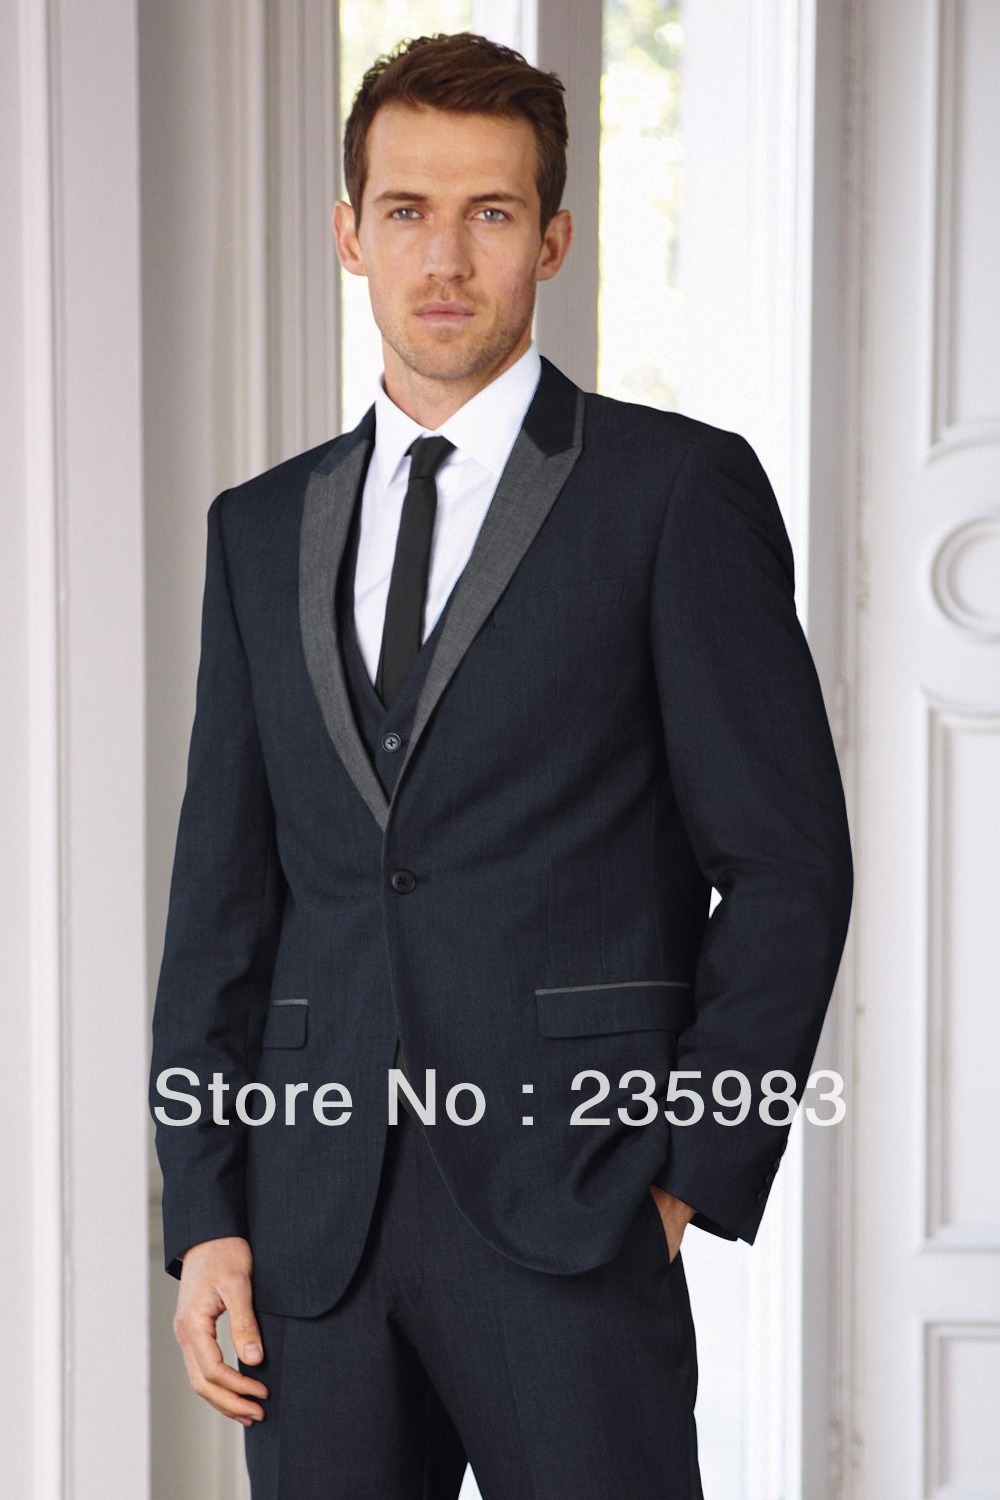 Charcoal Grey Suit For Wedding - Ocodea.com